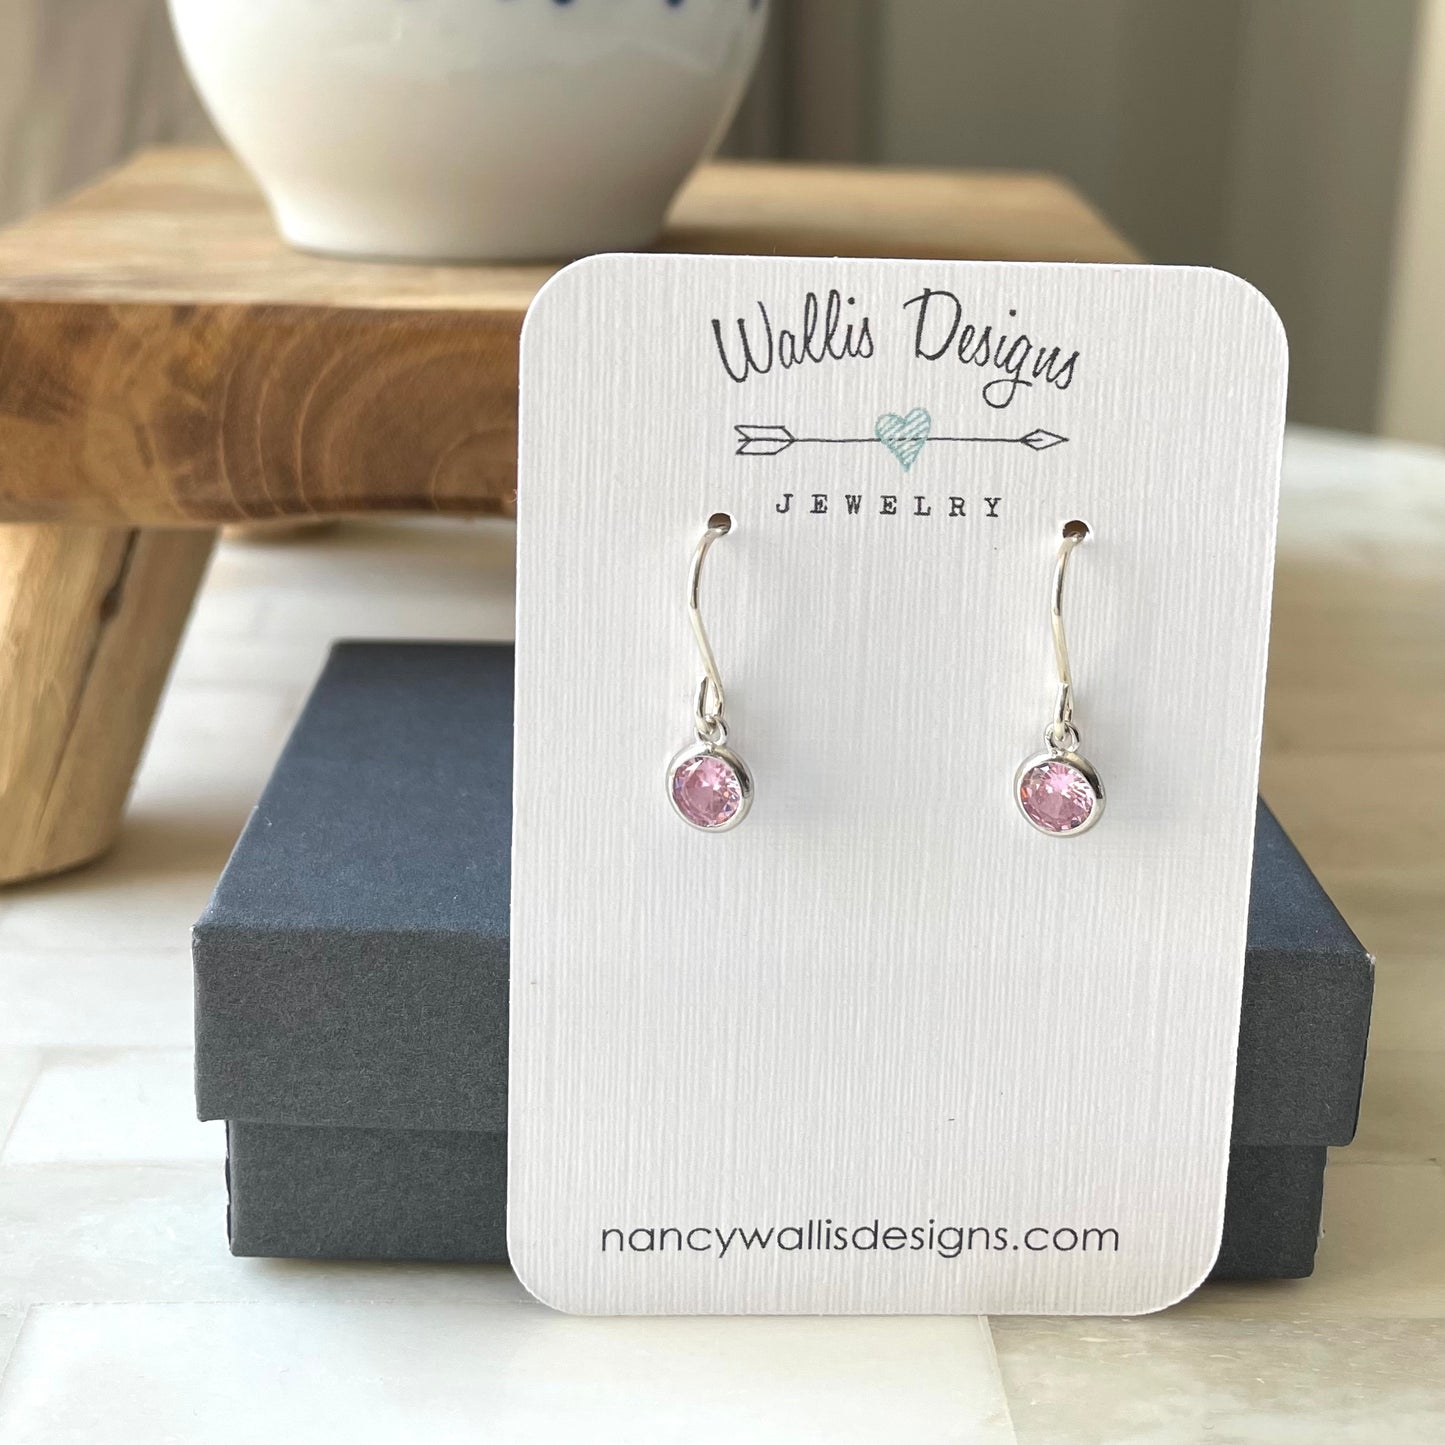 Dainty birthstone earrings. Made in Canada by Wallis Designs. October birthstone earrings.